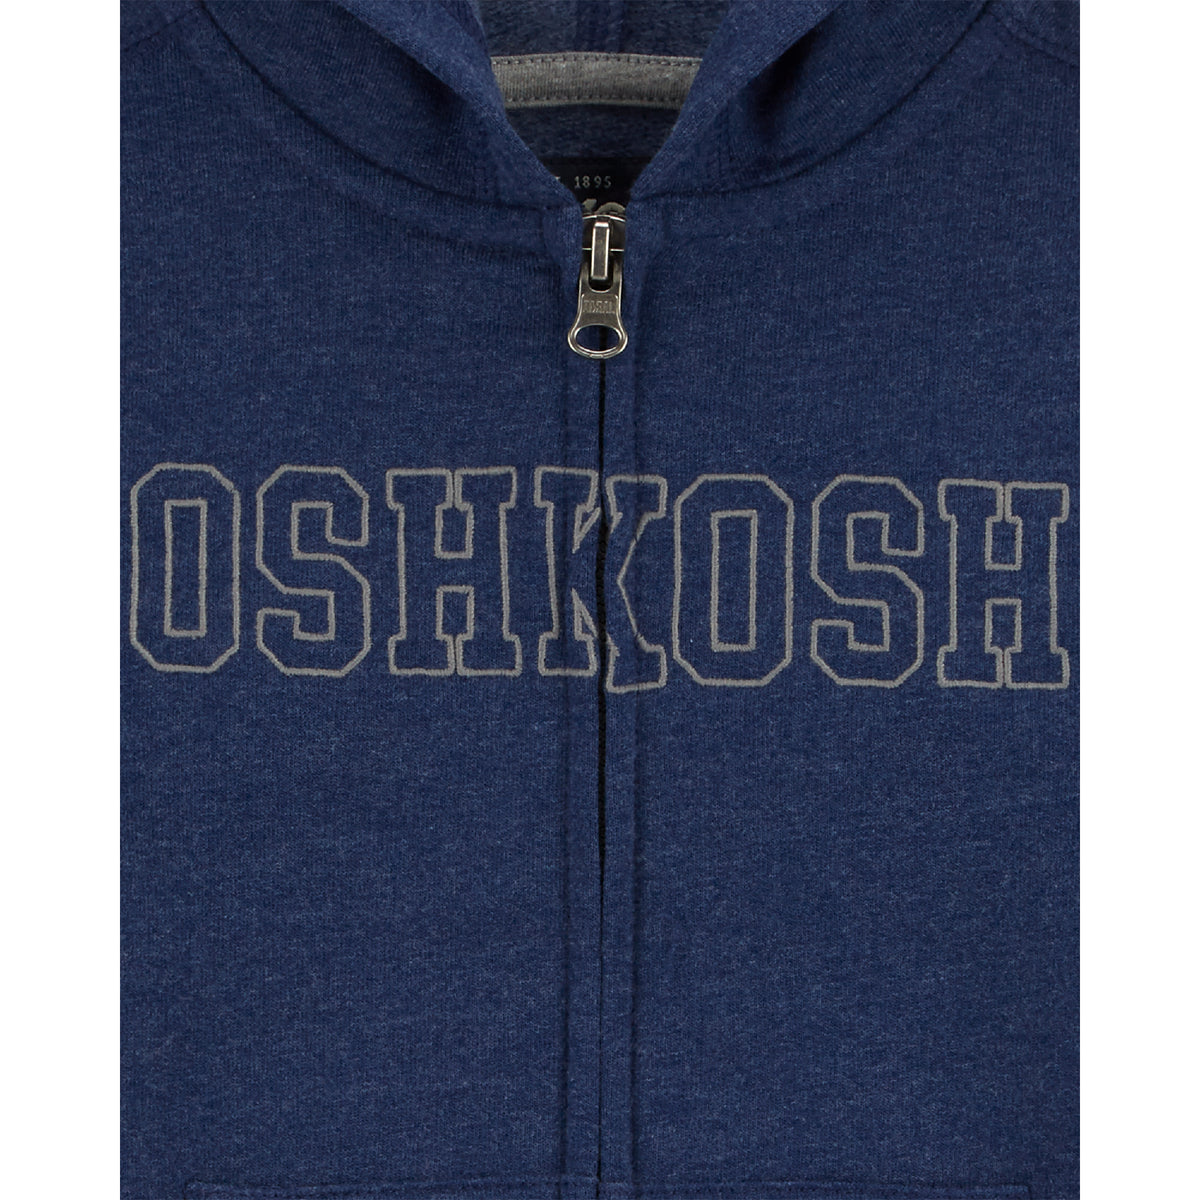 OshKosh 藍色連帽外套(12M-24M)